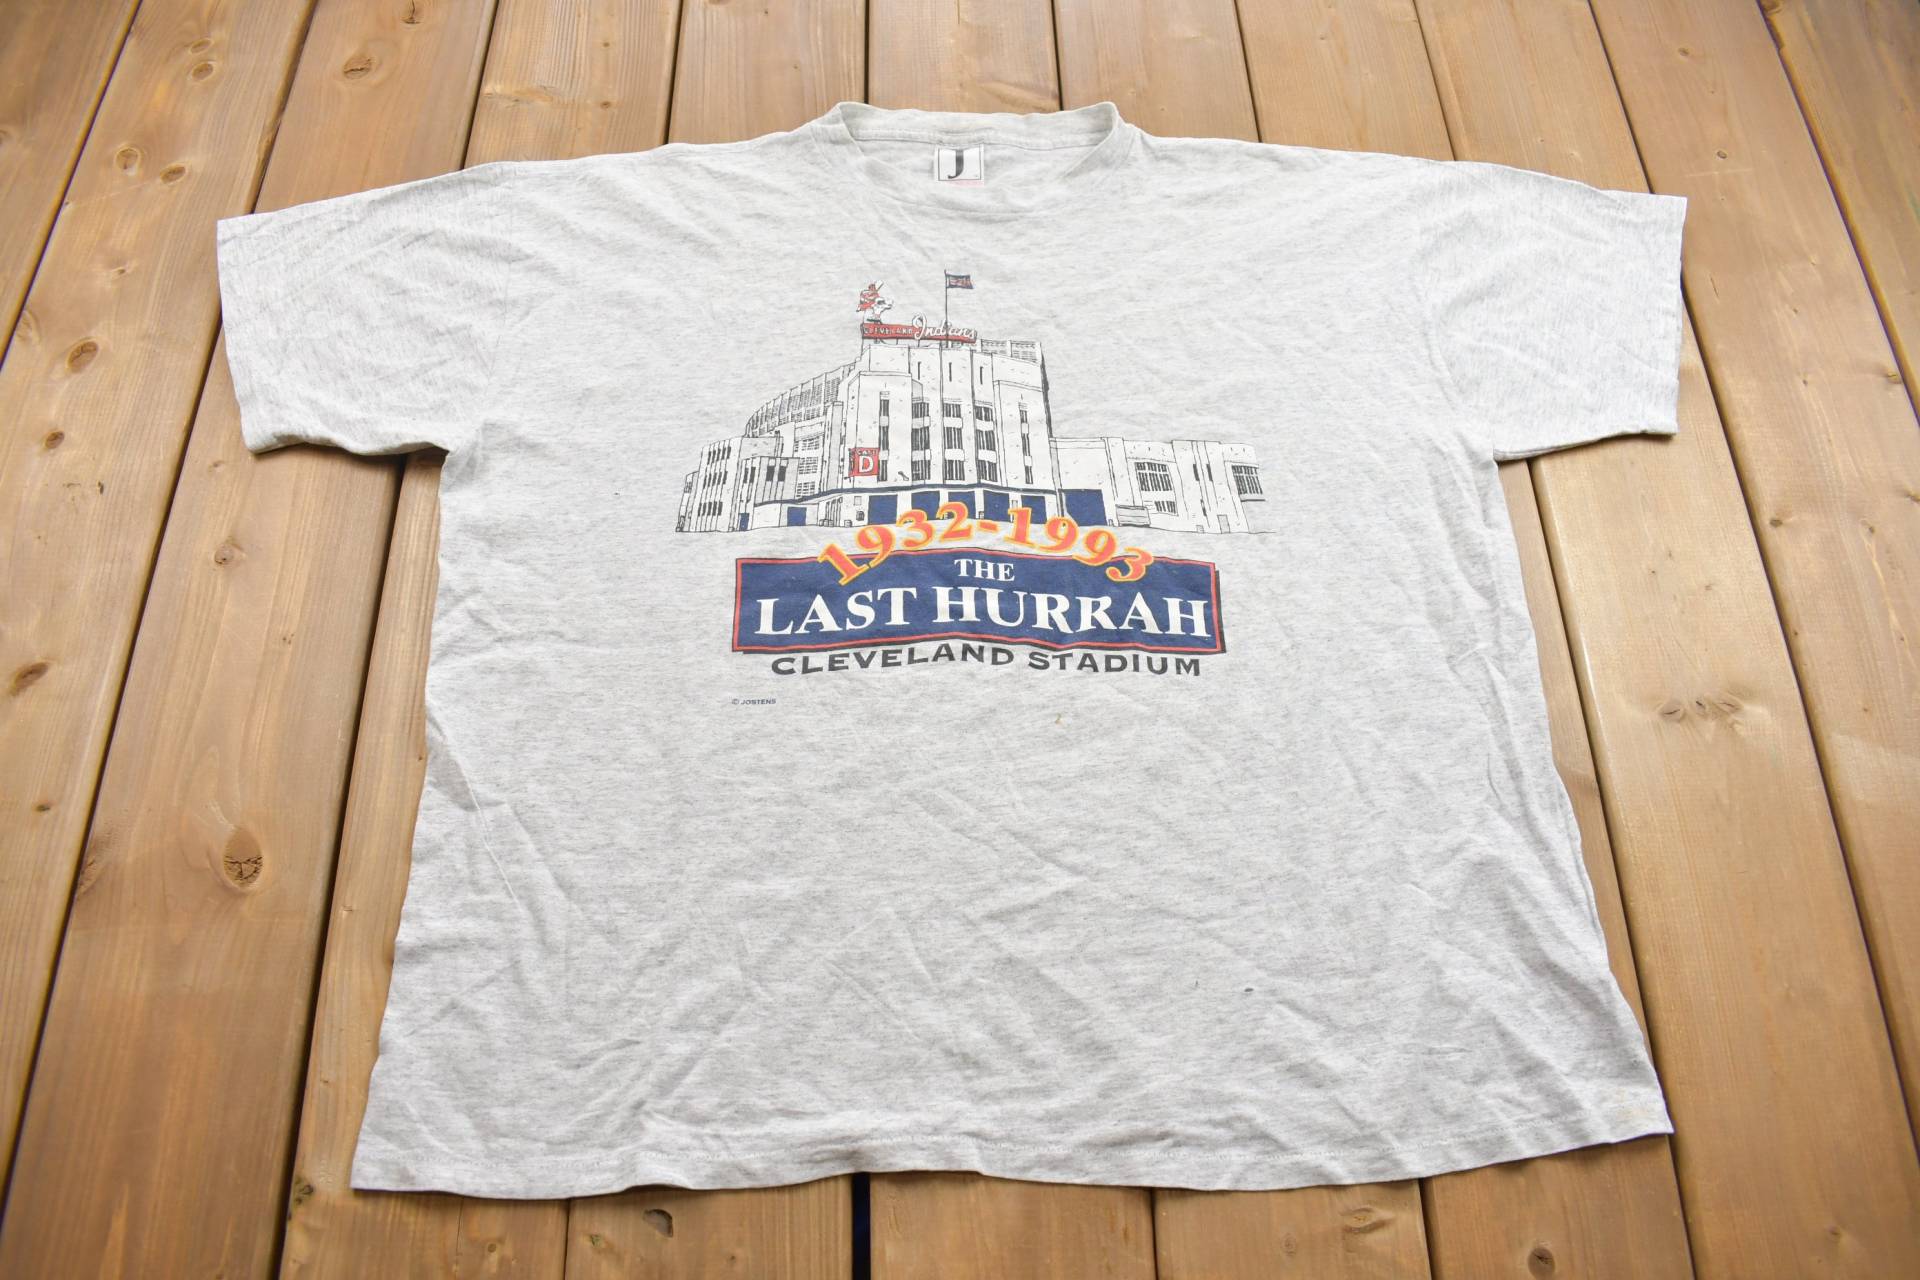 Jahrgang 1993 "The Last Hurrah" Grafik-T-Shirt/Vintage-T-Shirt Seltene Vintage Streetwear Single Stitch Made in Usa von Lostboysvintage